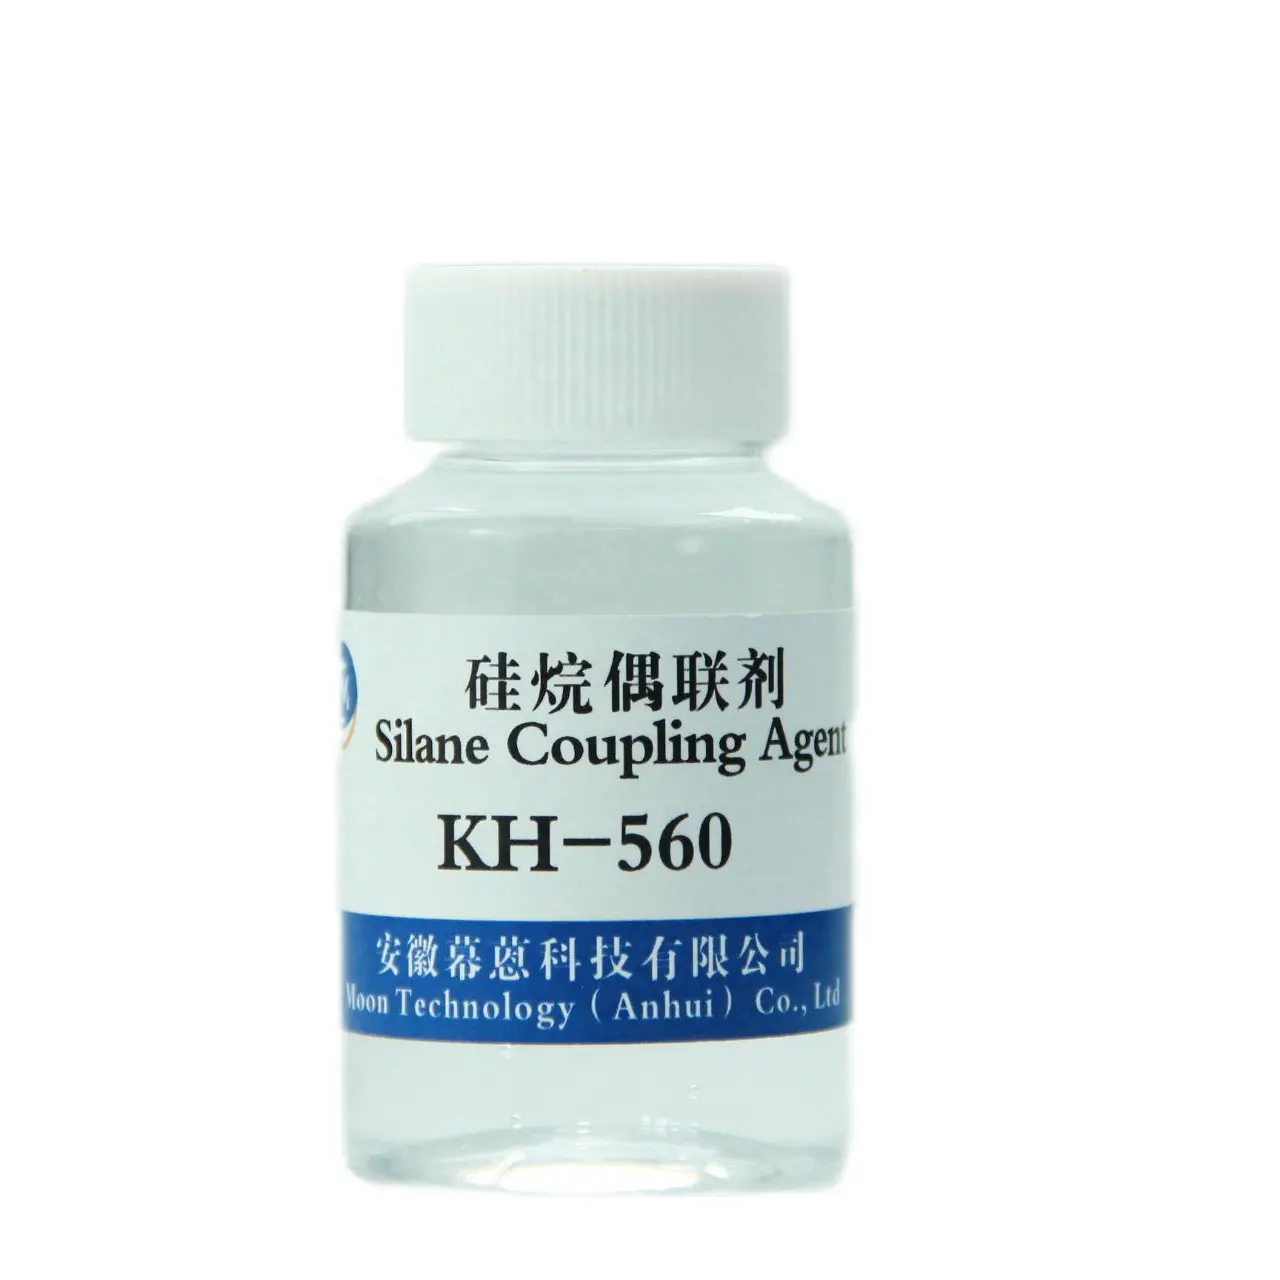 GLYMO / A 187 / CAS 2530-83-8 3-Glycidoxypropyltrimethoxysilan KH560